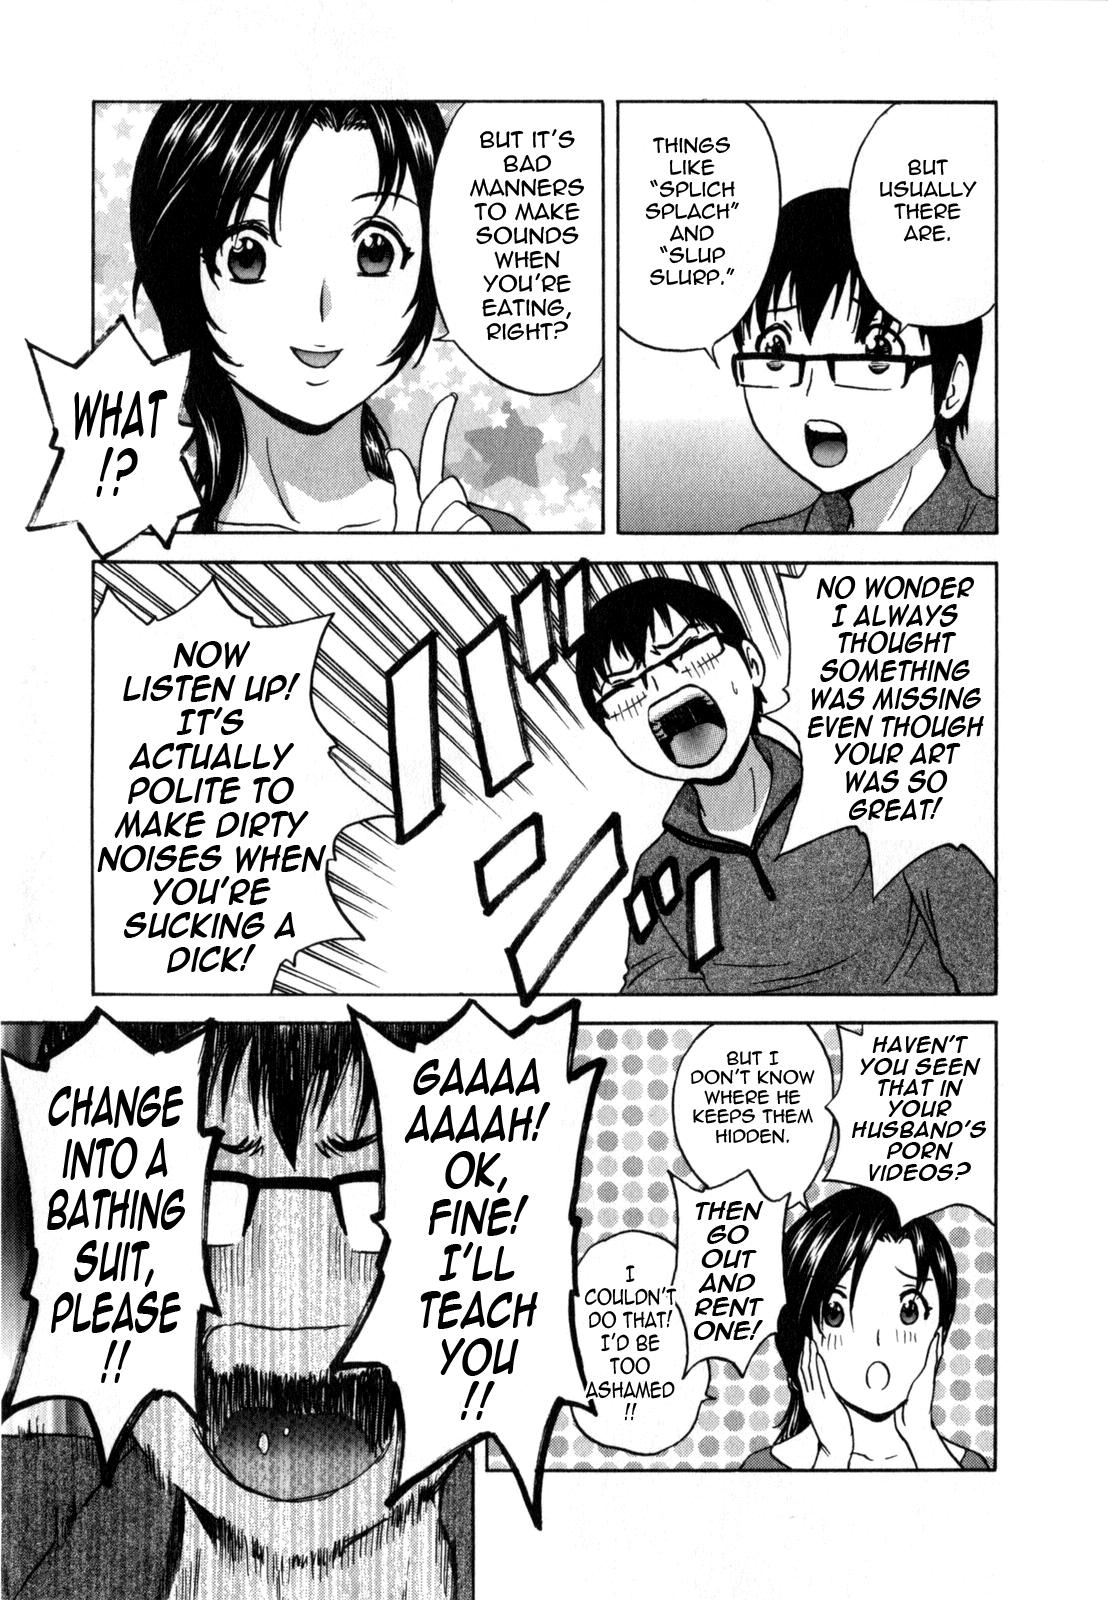 [Hidemaru] Life with Married Women Just Like a Manga 1 - Ch. 1-9 [English] {Tadanohito} 16